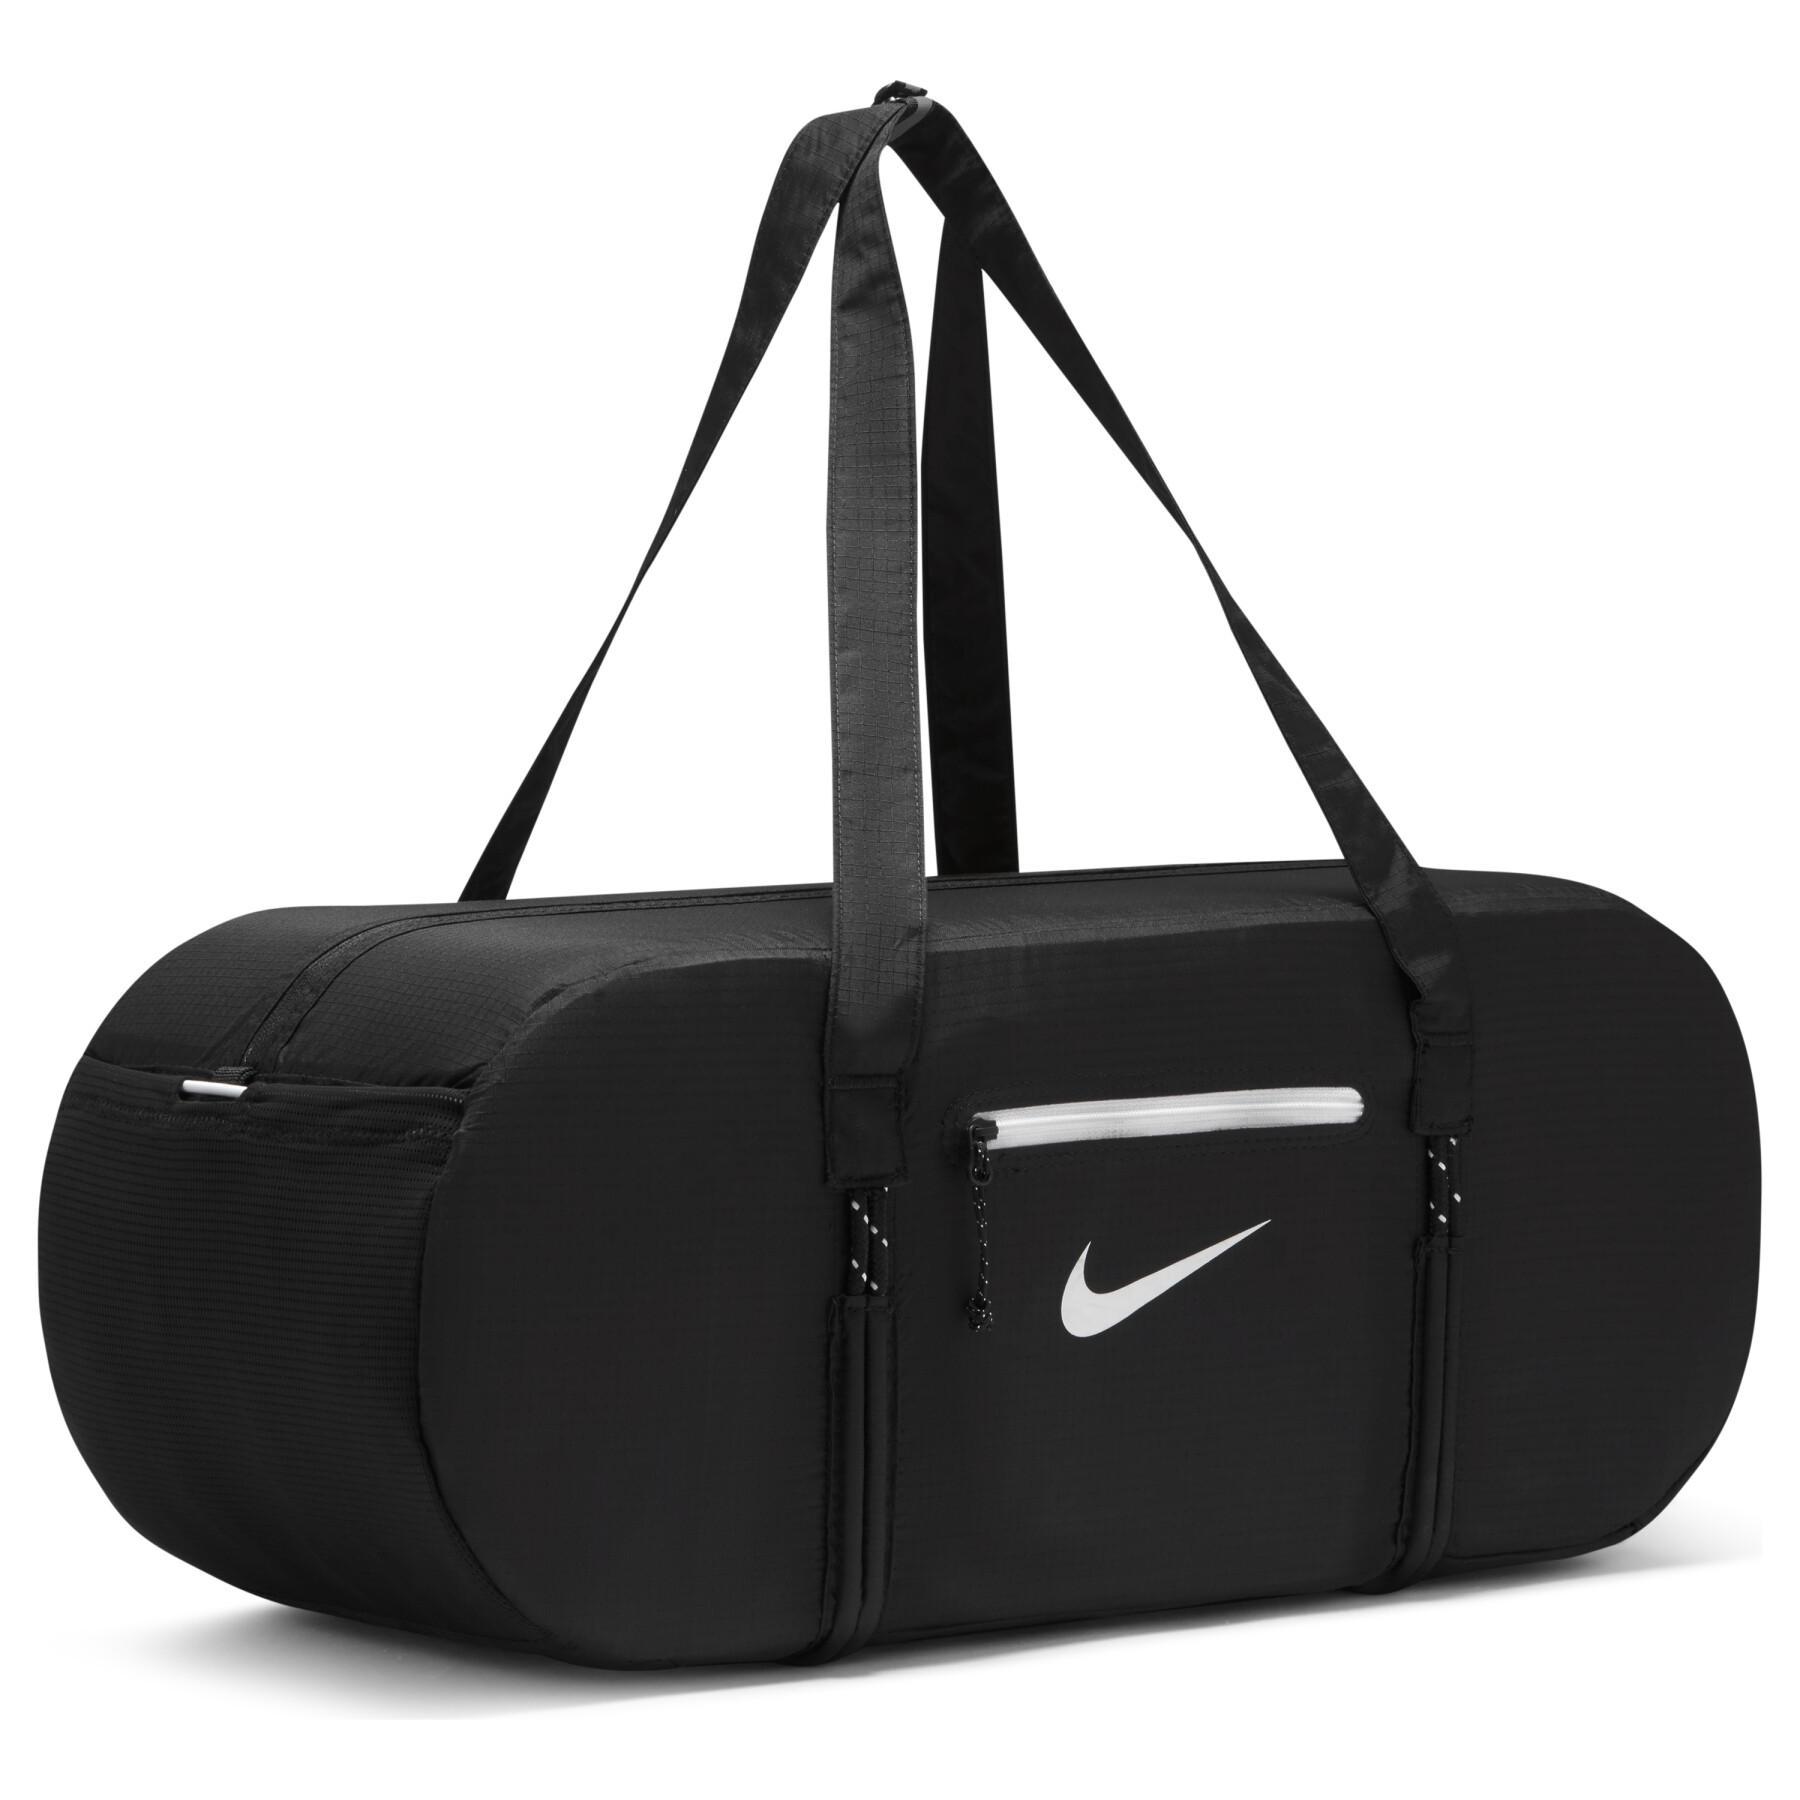 Tasche Nike